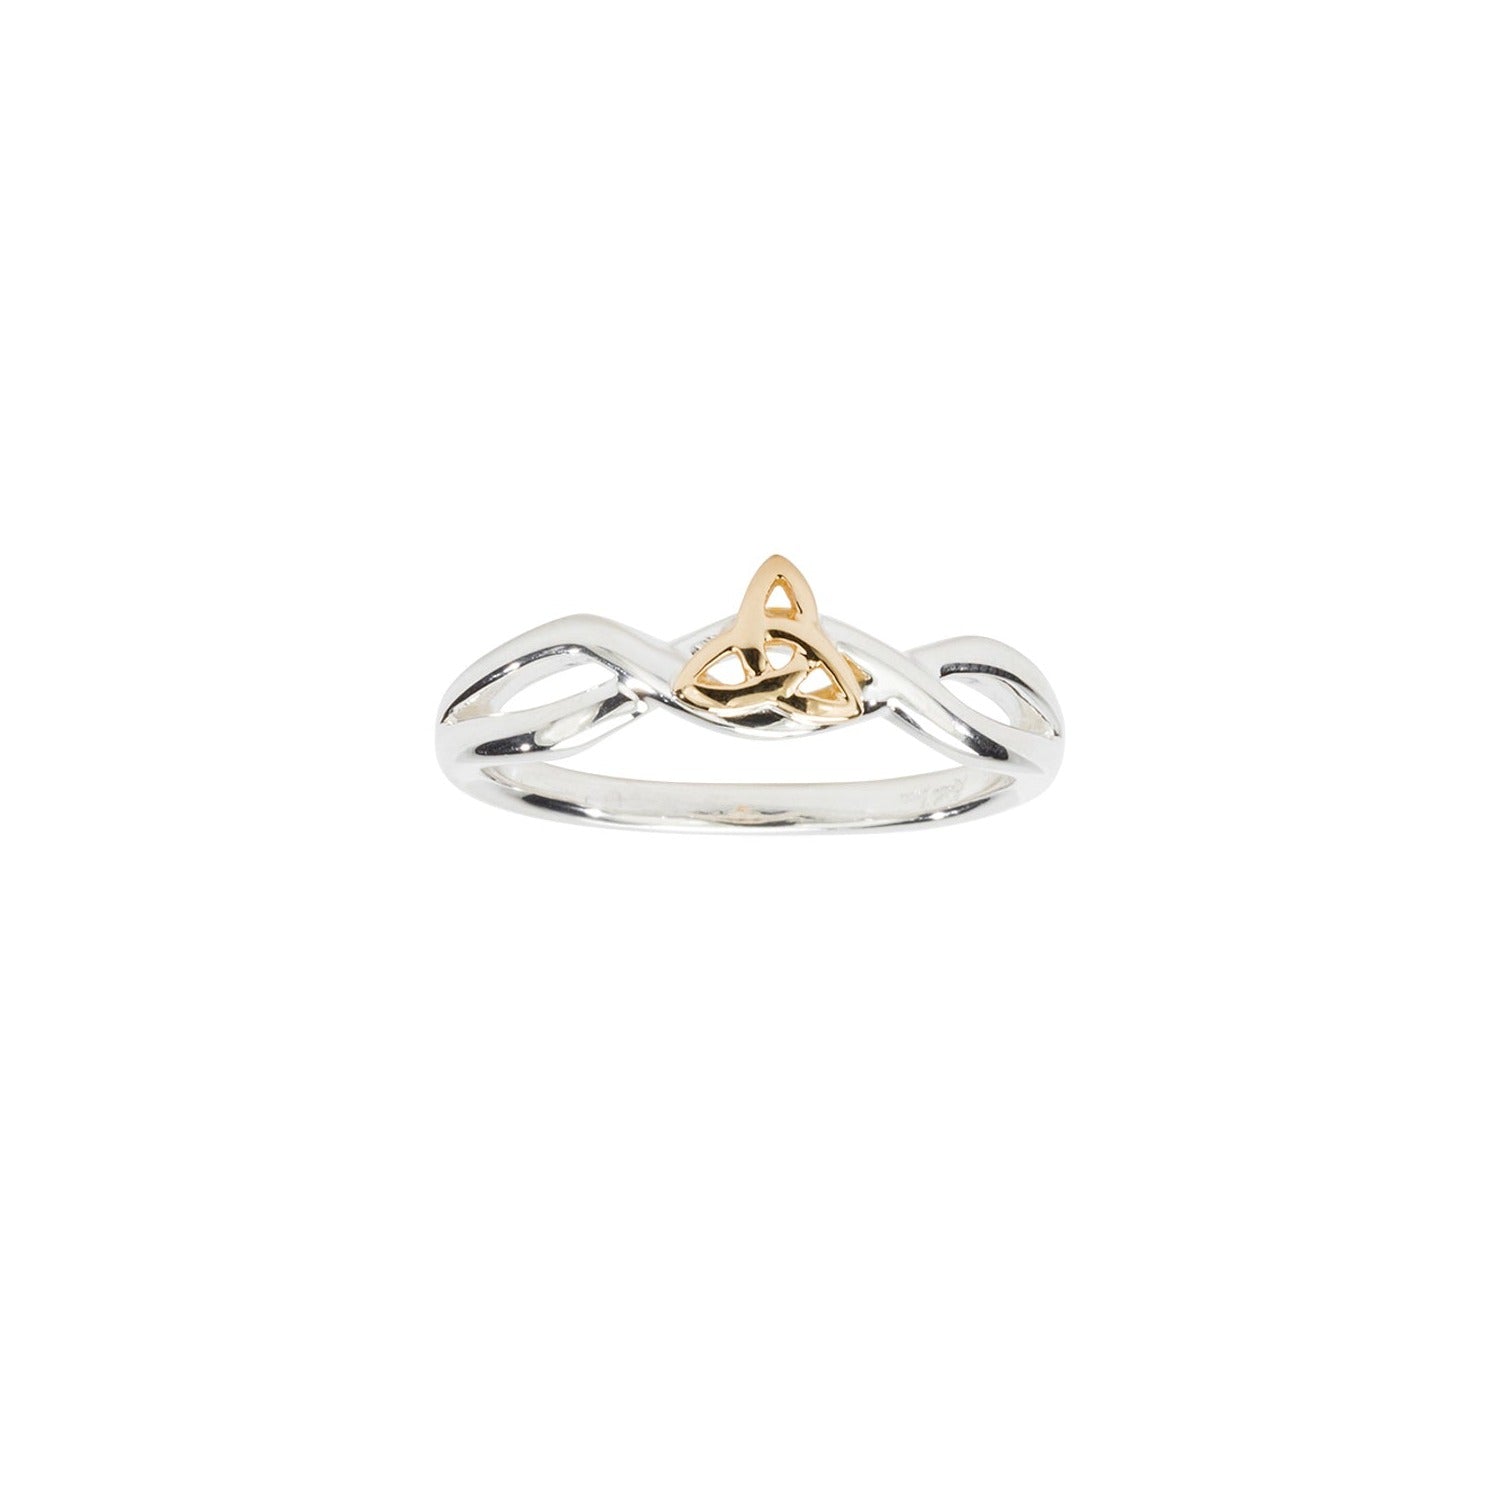 Ring Bands 10k Infinity Trinity Knot Ring from welch and company jewelers near syracuse ny 